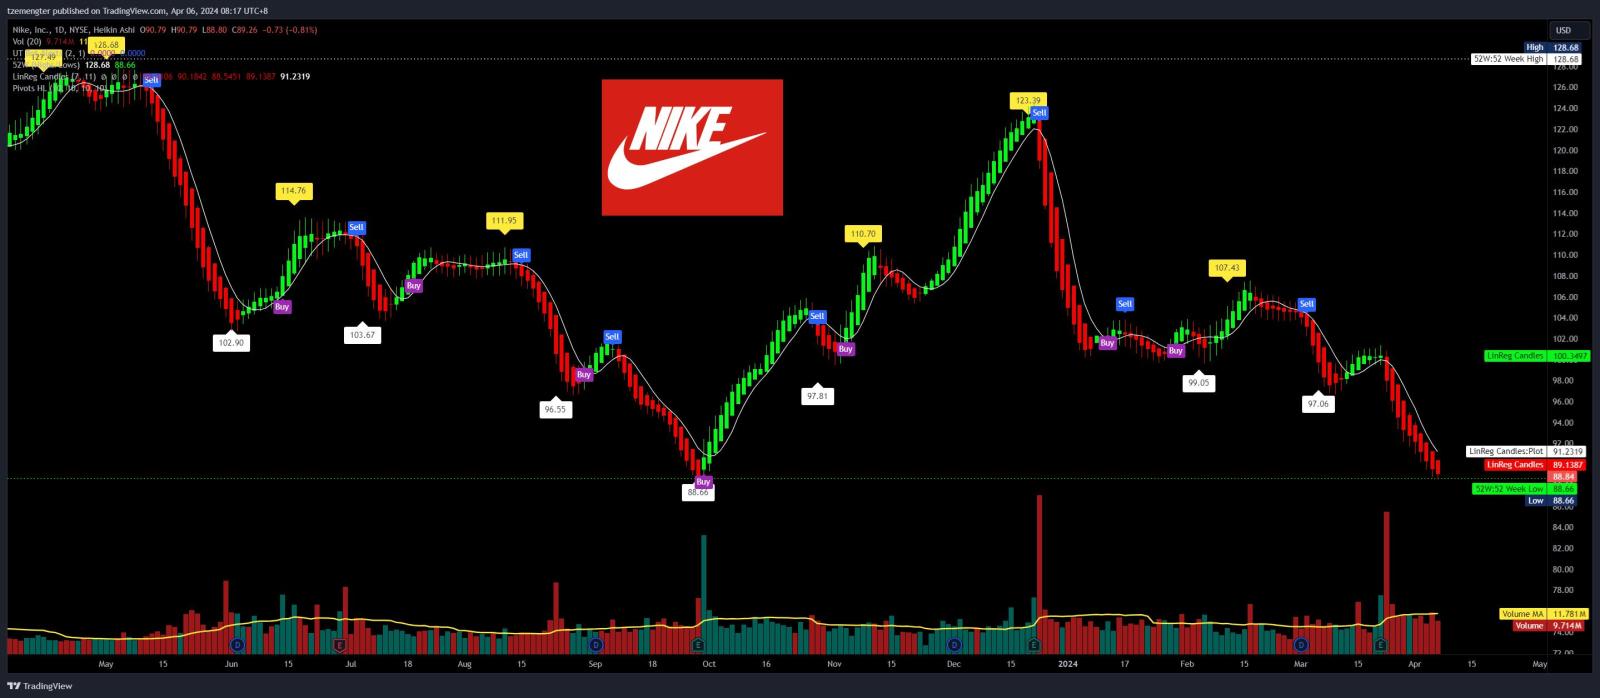 $Nike (NKE.US)$ now at huat huat support zone, break down?